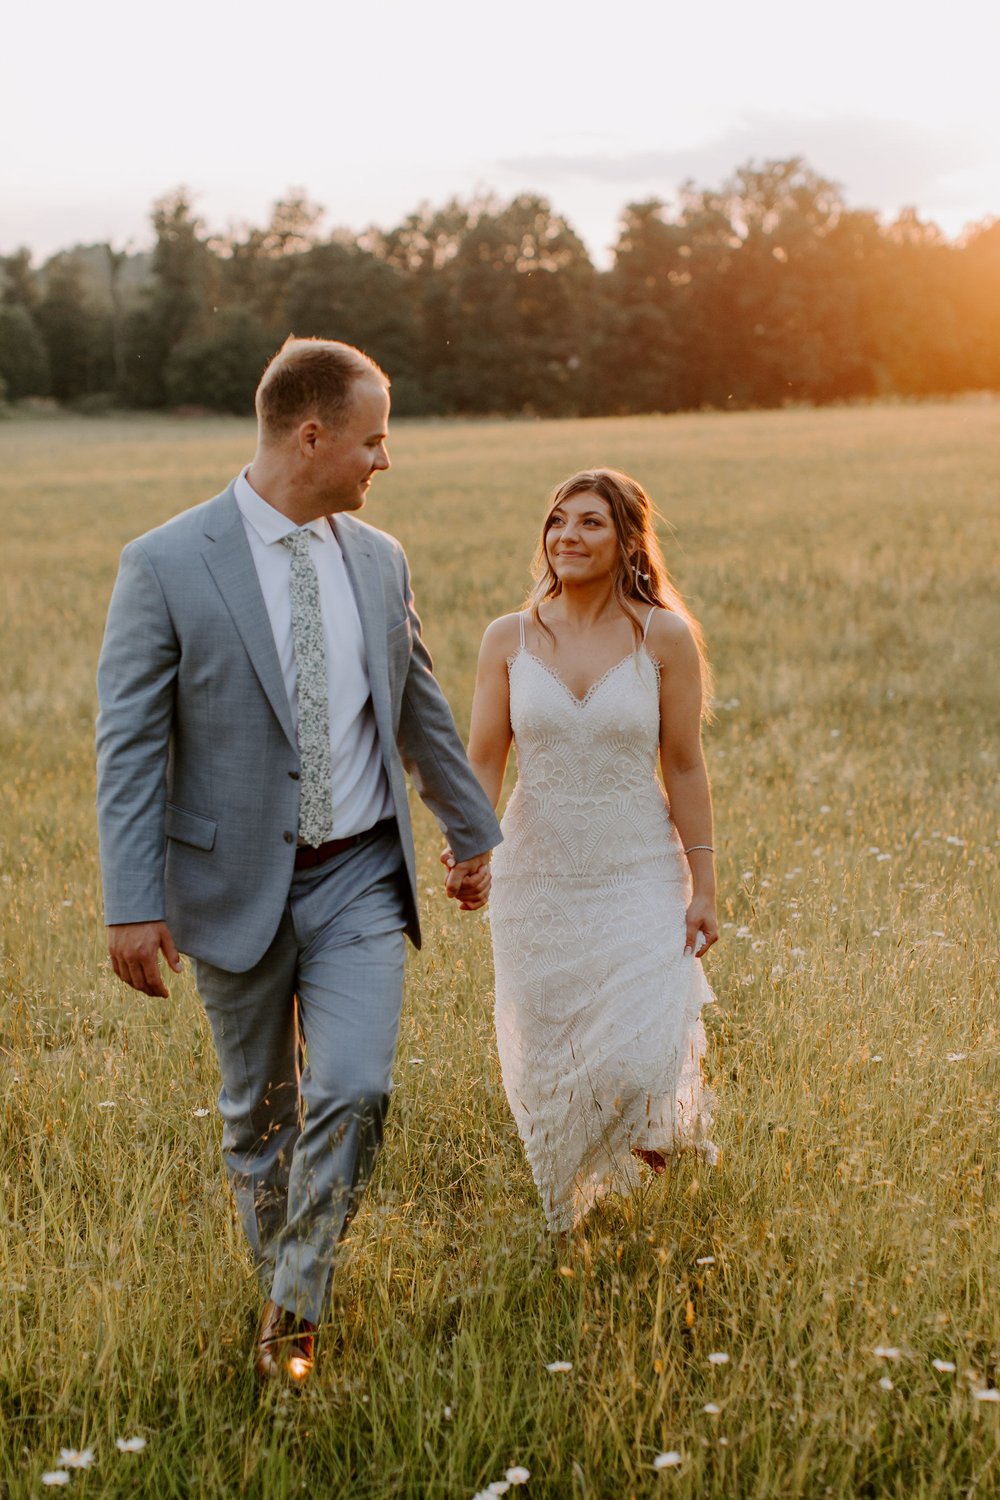 Couple walks holding hands in wedding sunset field photos